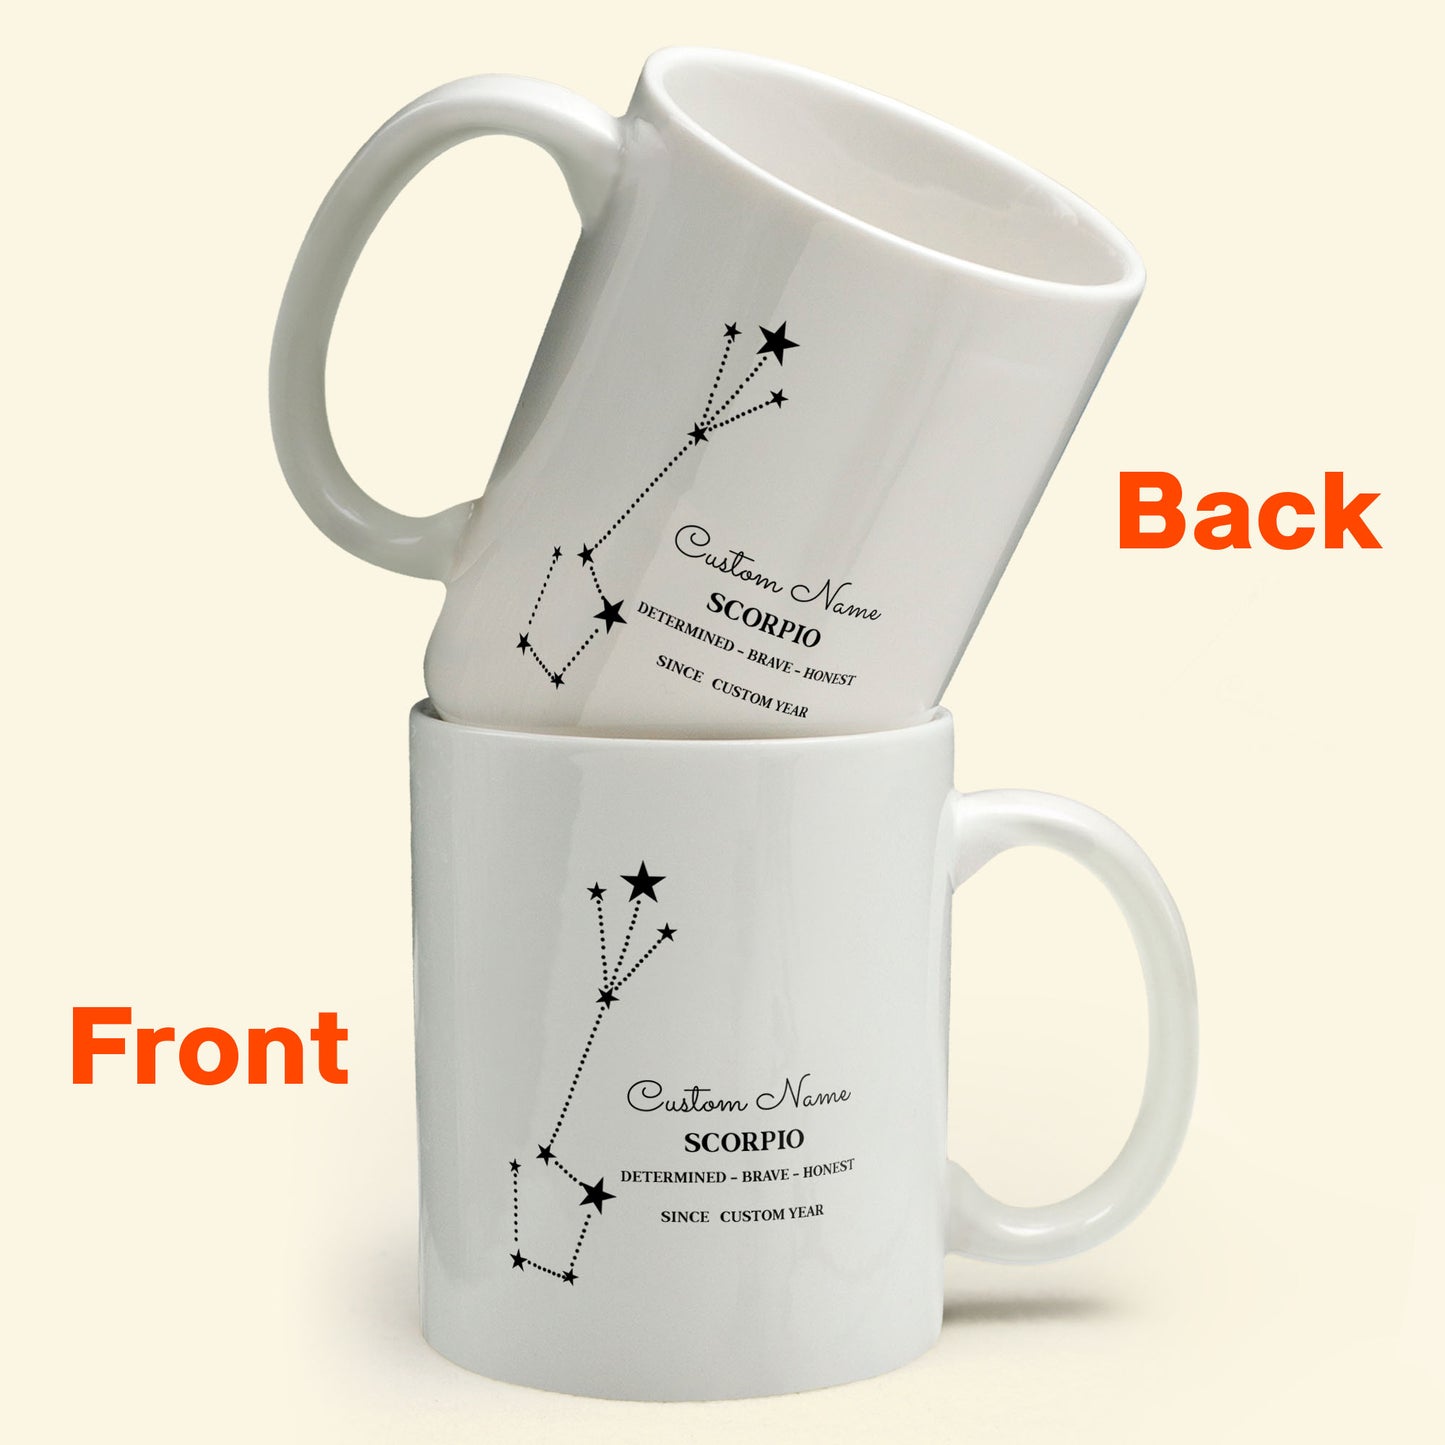 Scorpio Mug - Personalized Mug - Birthday Gift For Friends And Family